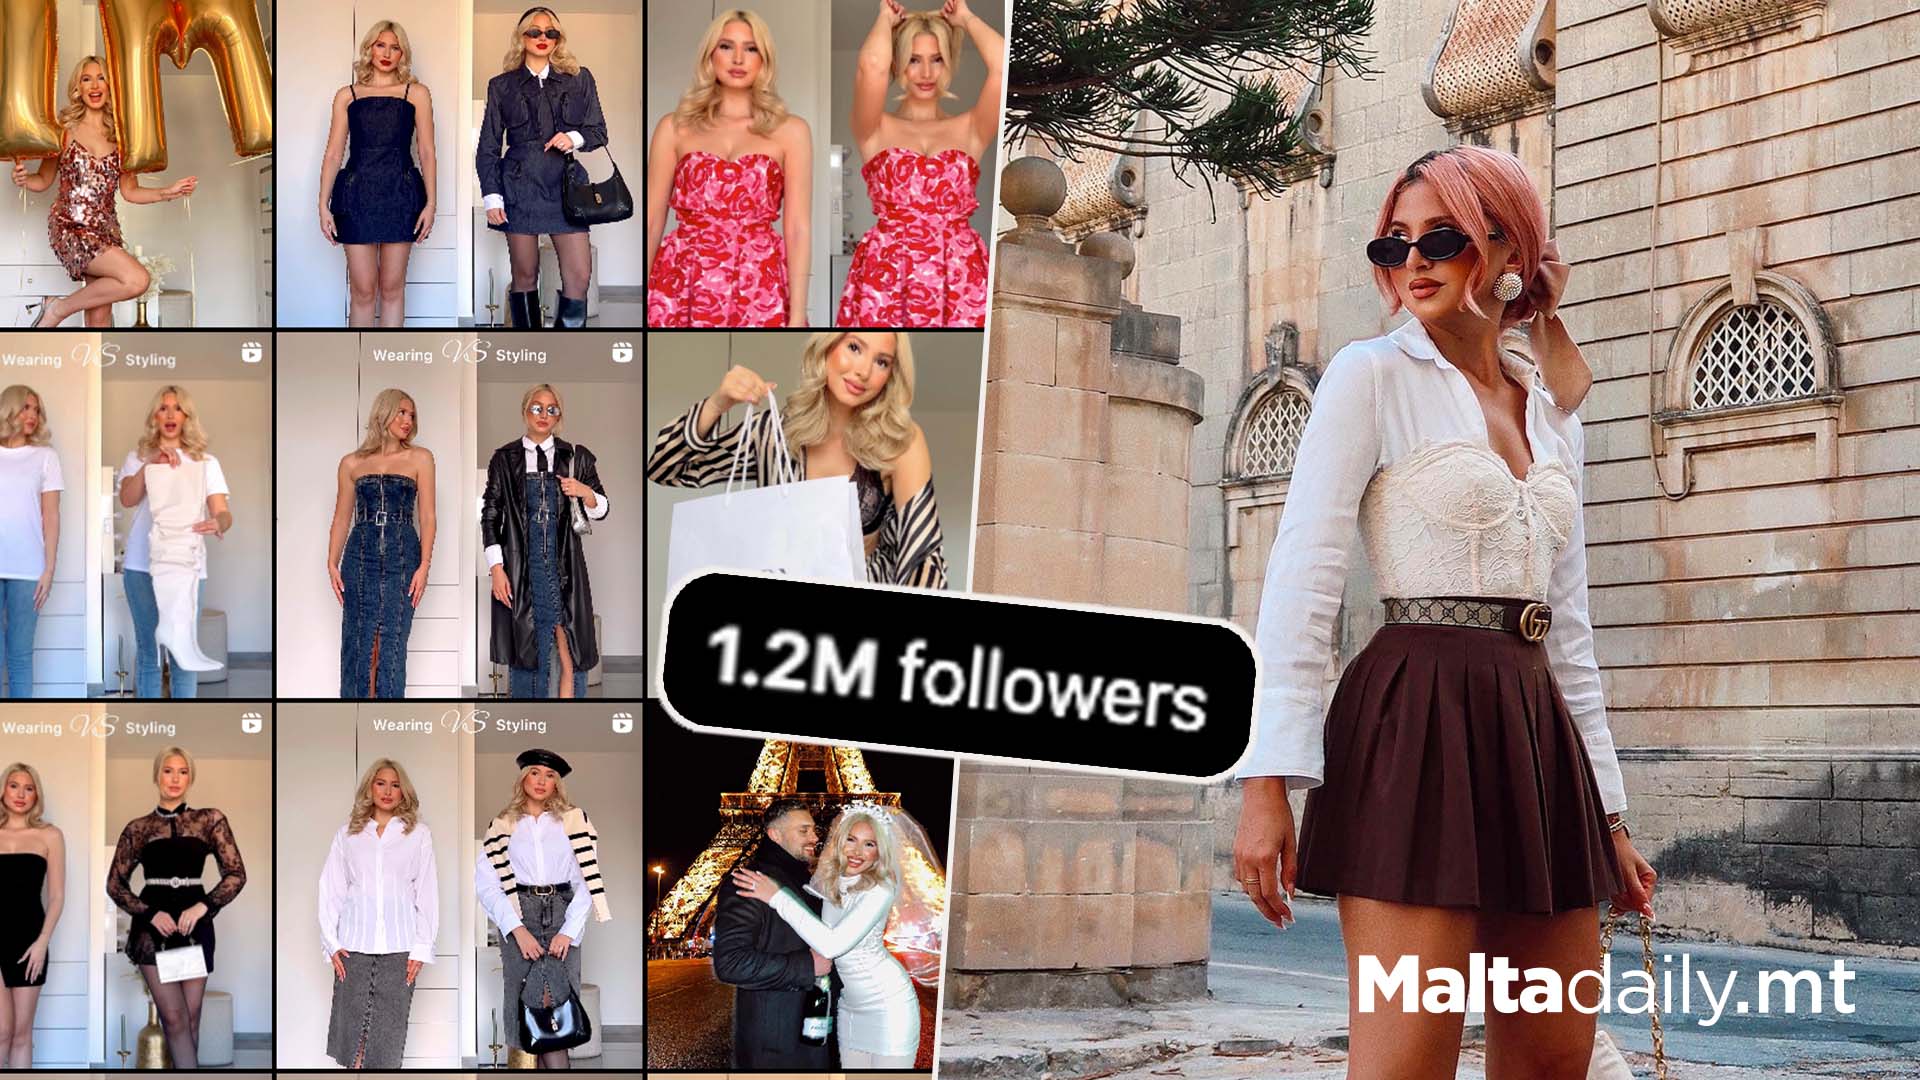 Sosa Zerafa Celebrates Hitting 1 Million Instagram Followers